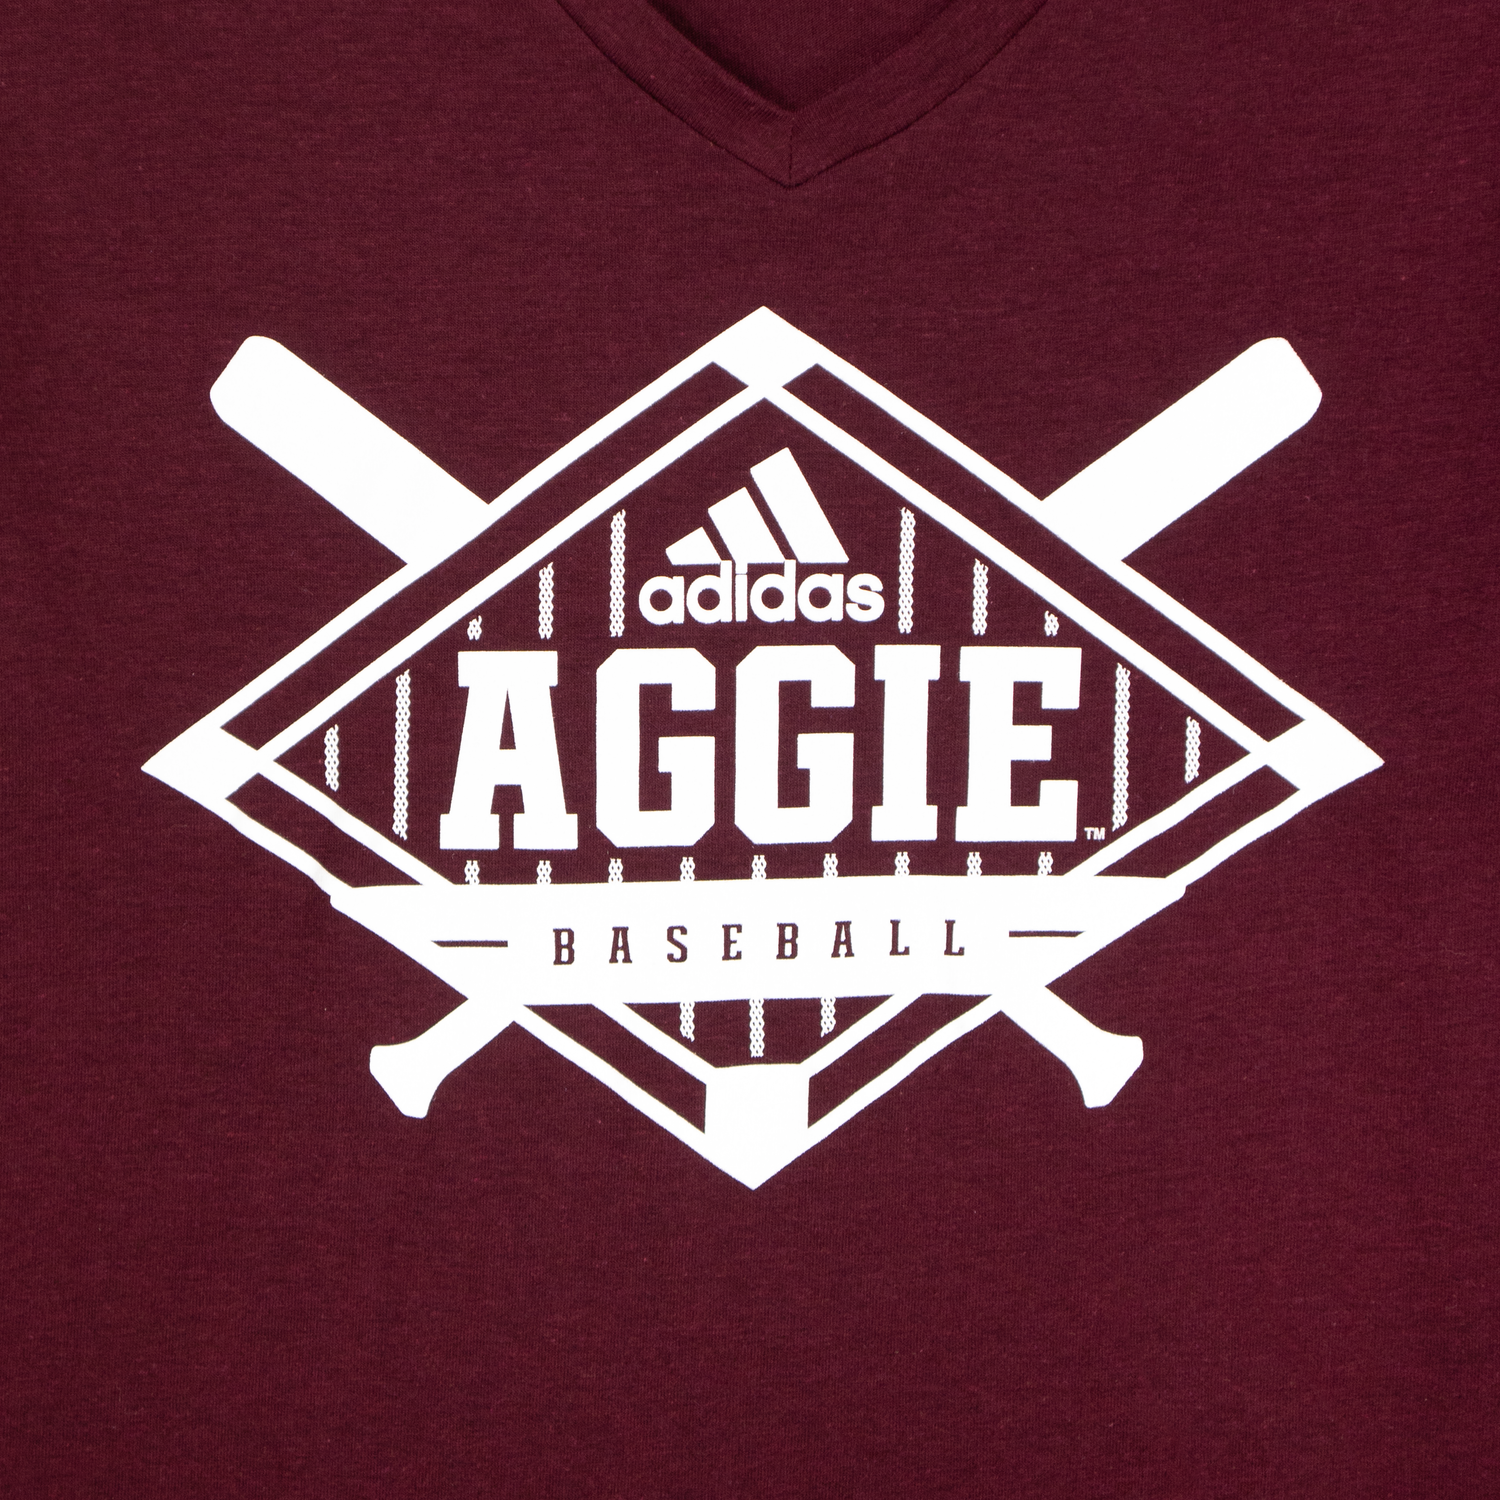 Aggie Baseball Adidas Women's Maroon T-Shirt